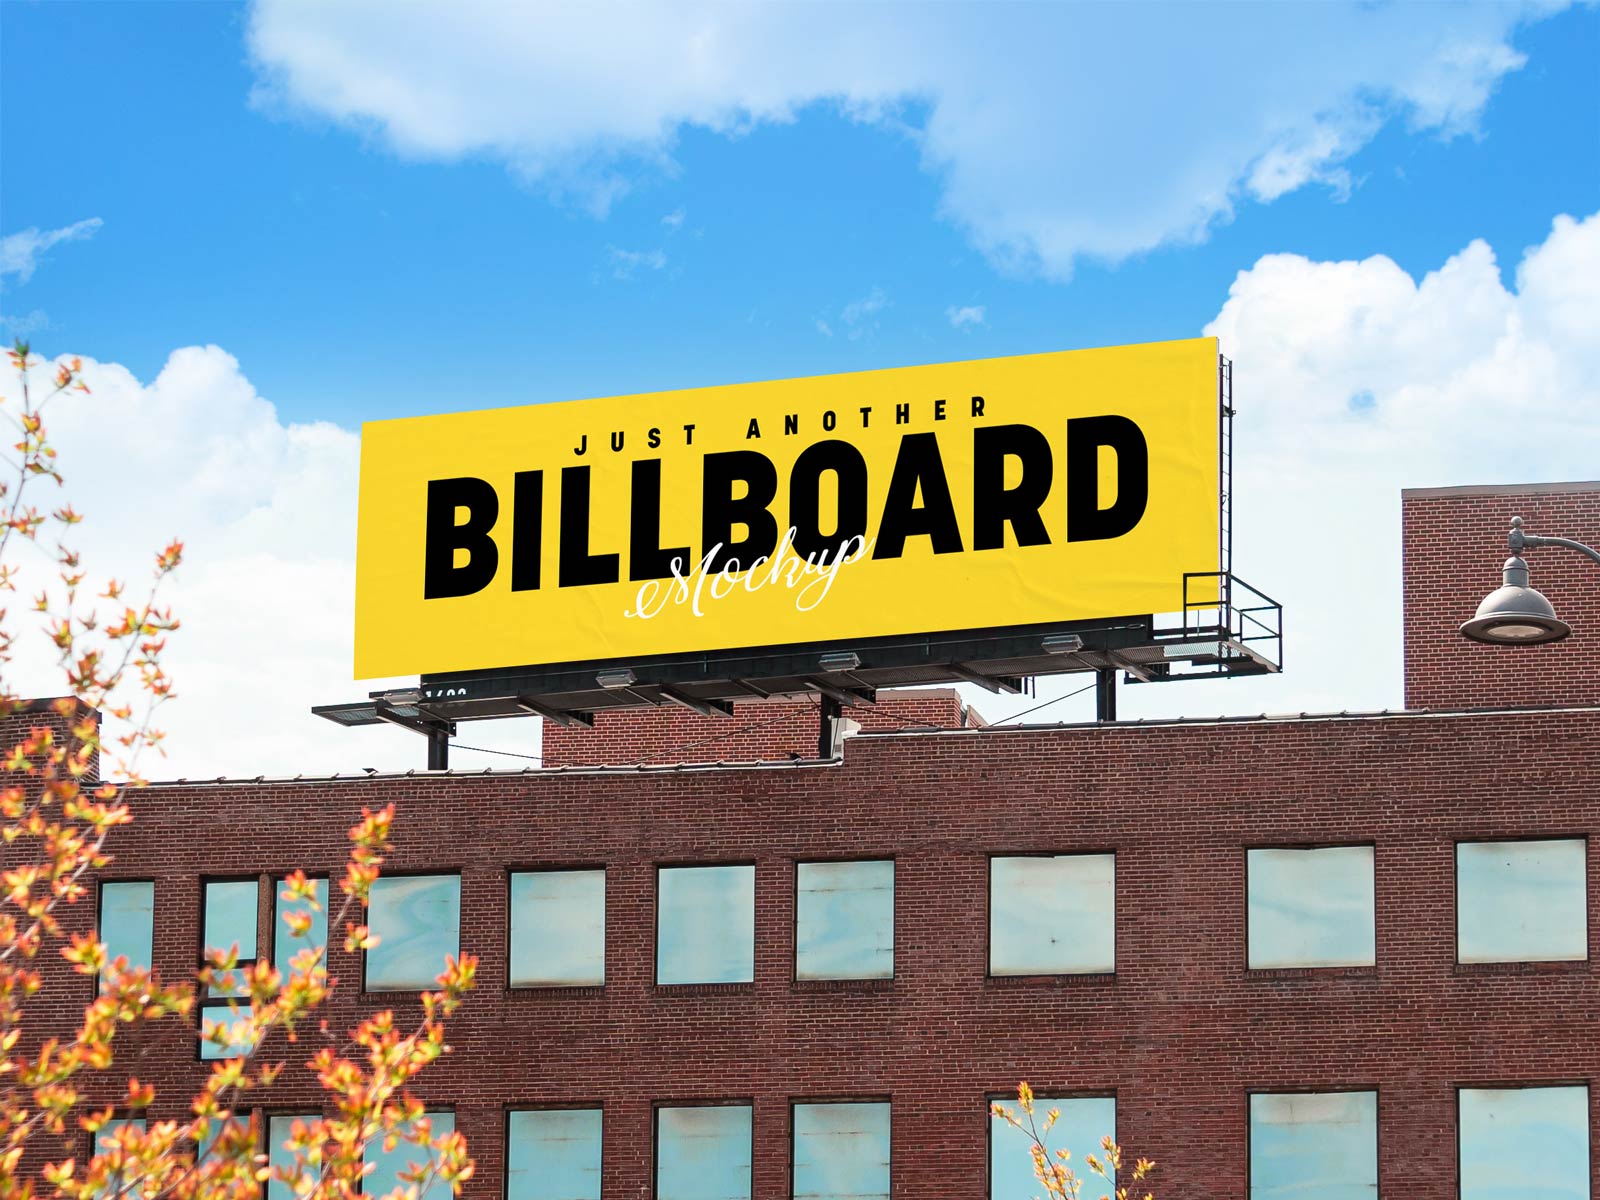 free-billboard-on-building-mockup-psd-designbolts